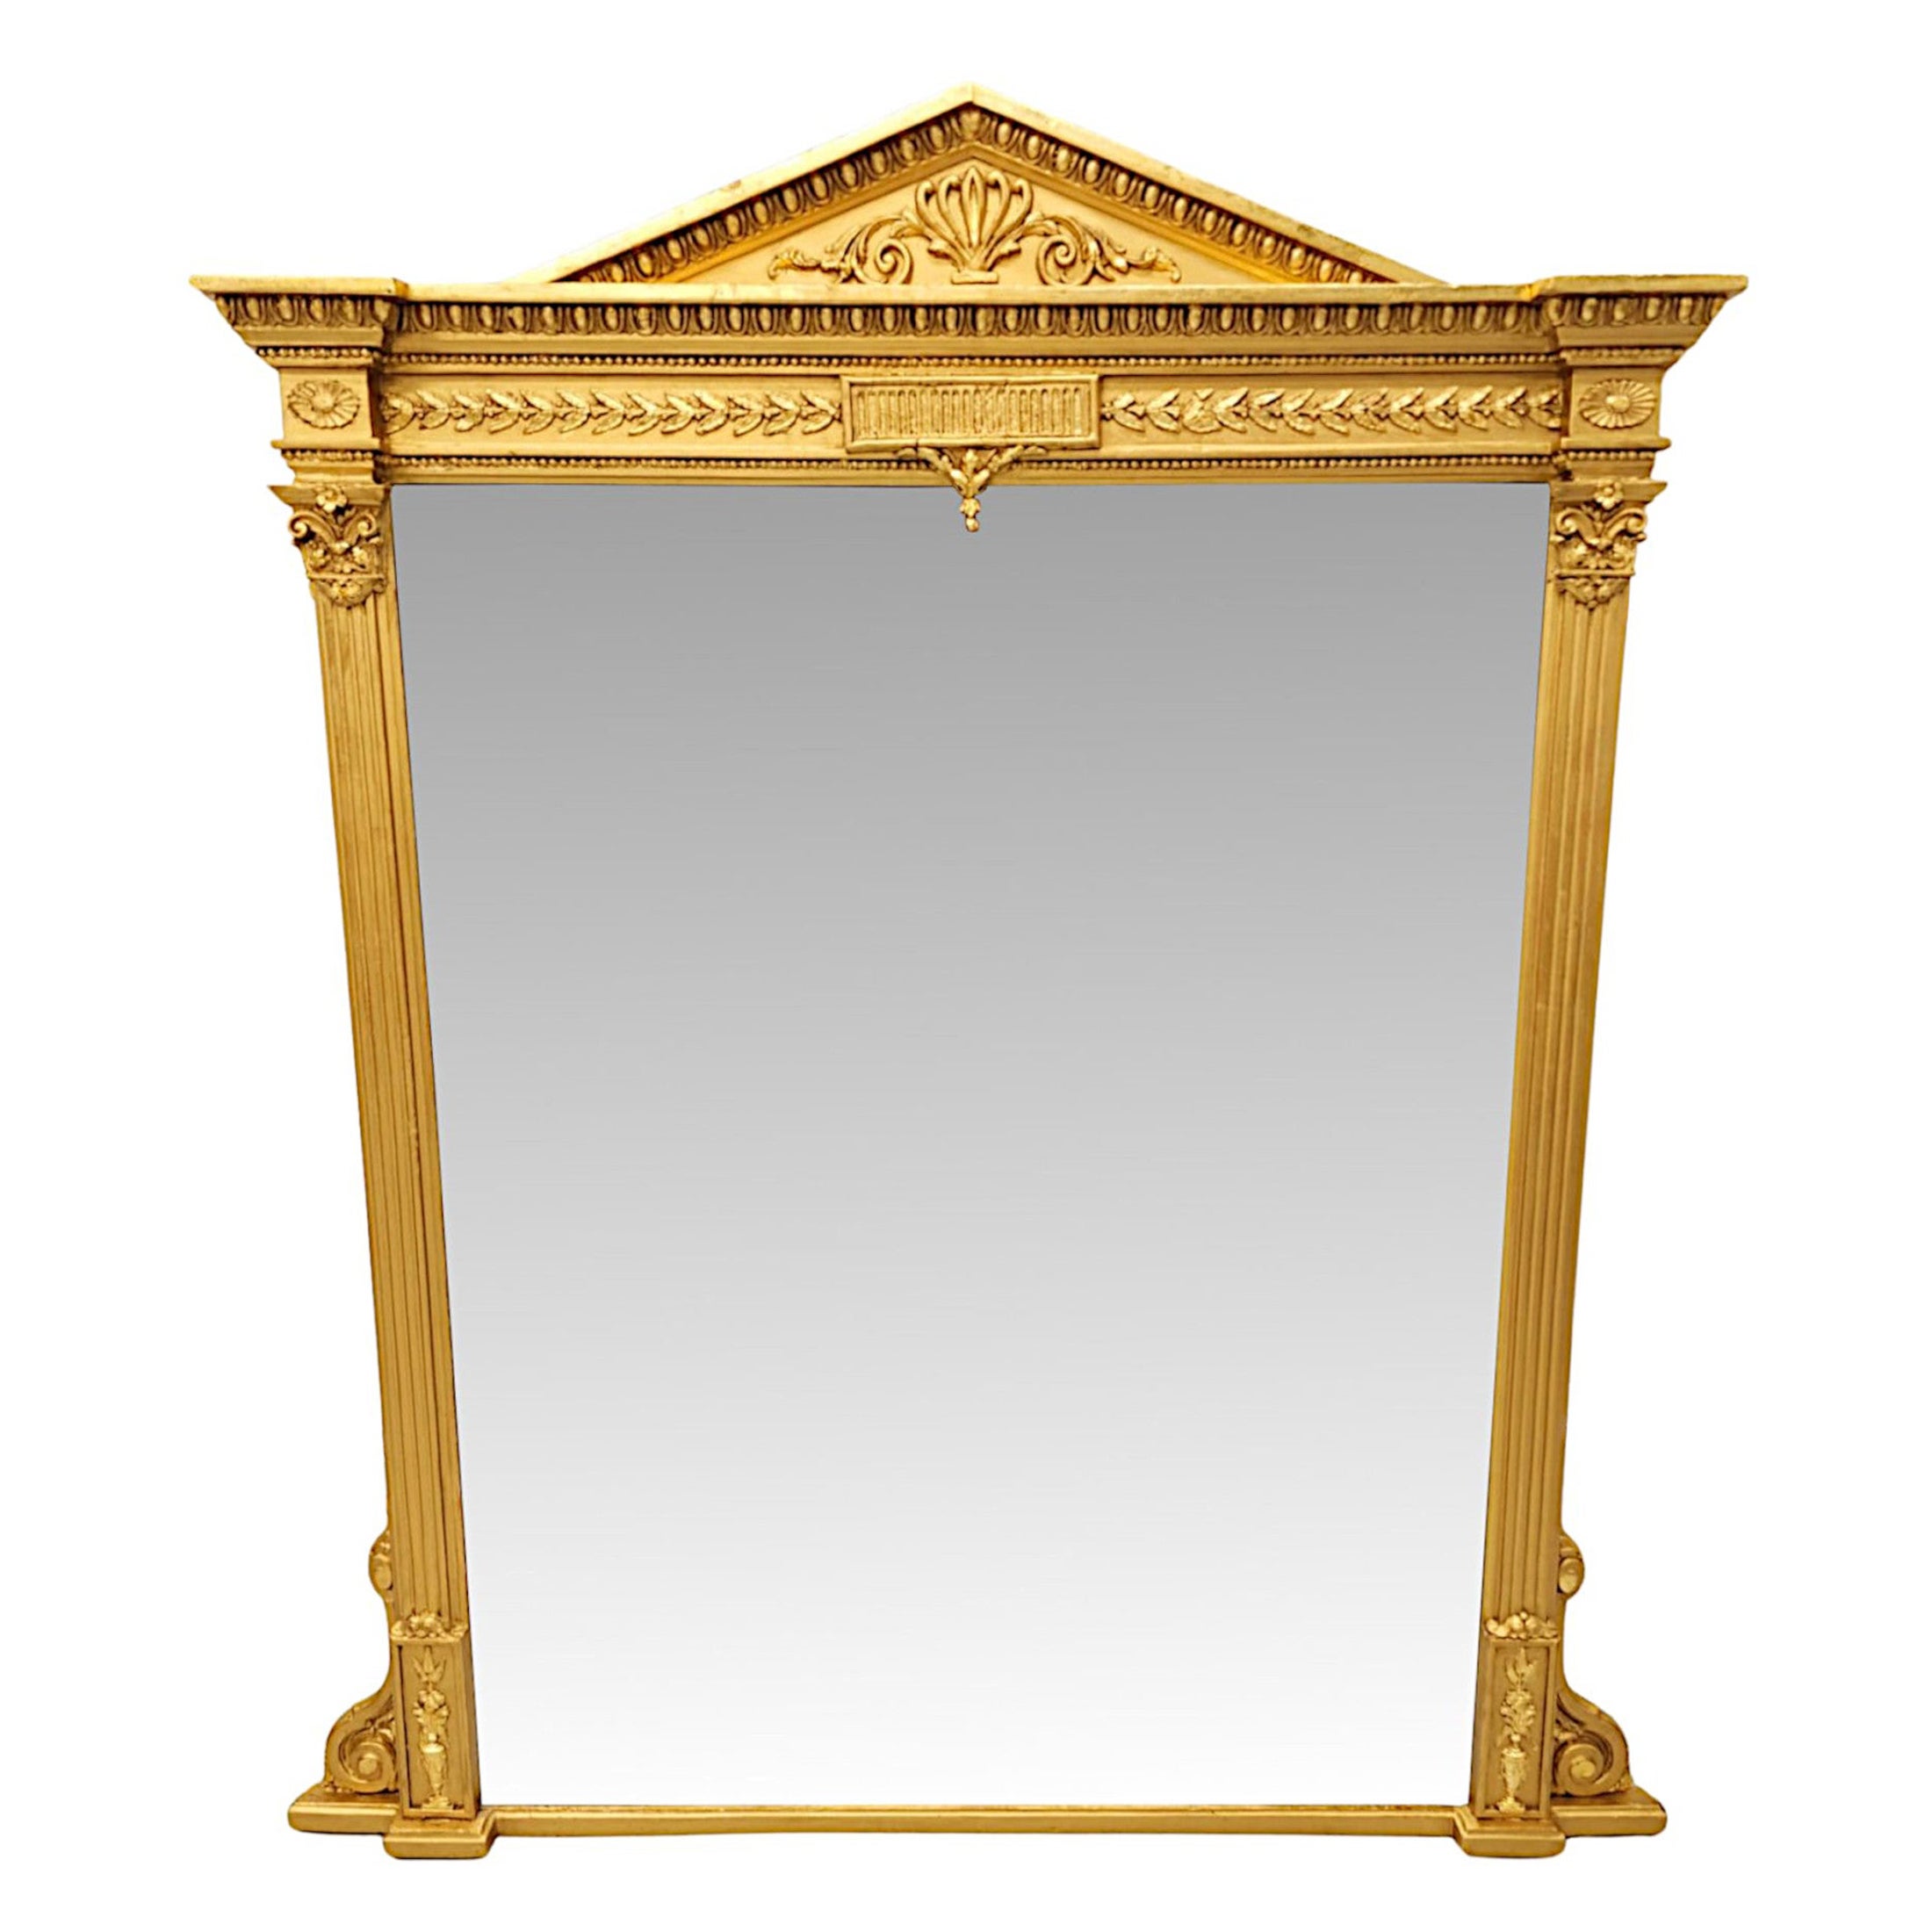 A Stunning 19th Century Giltwood Overmantel Mirror